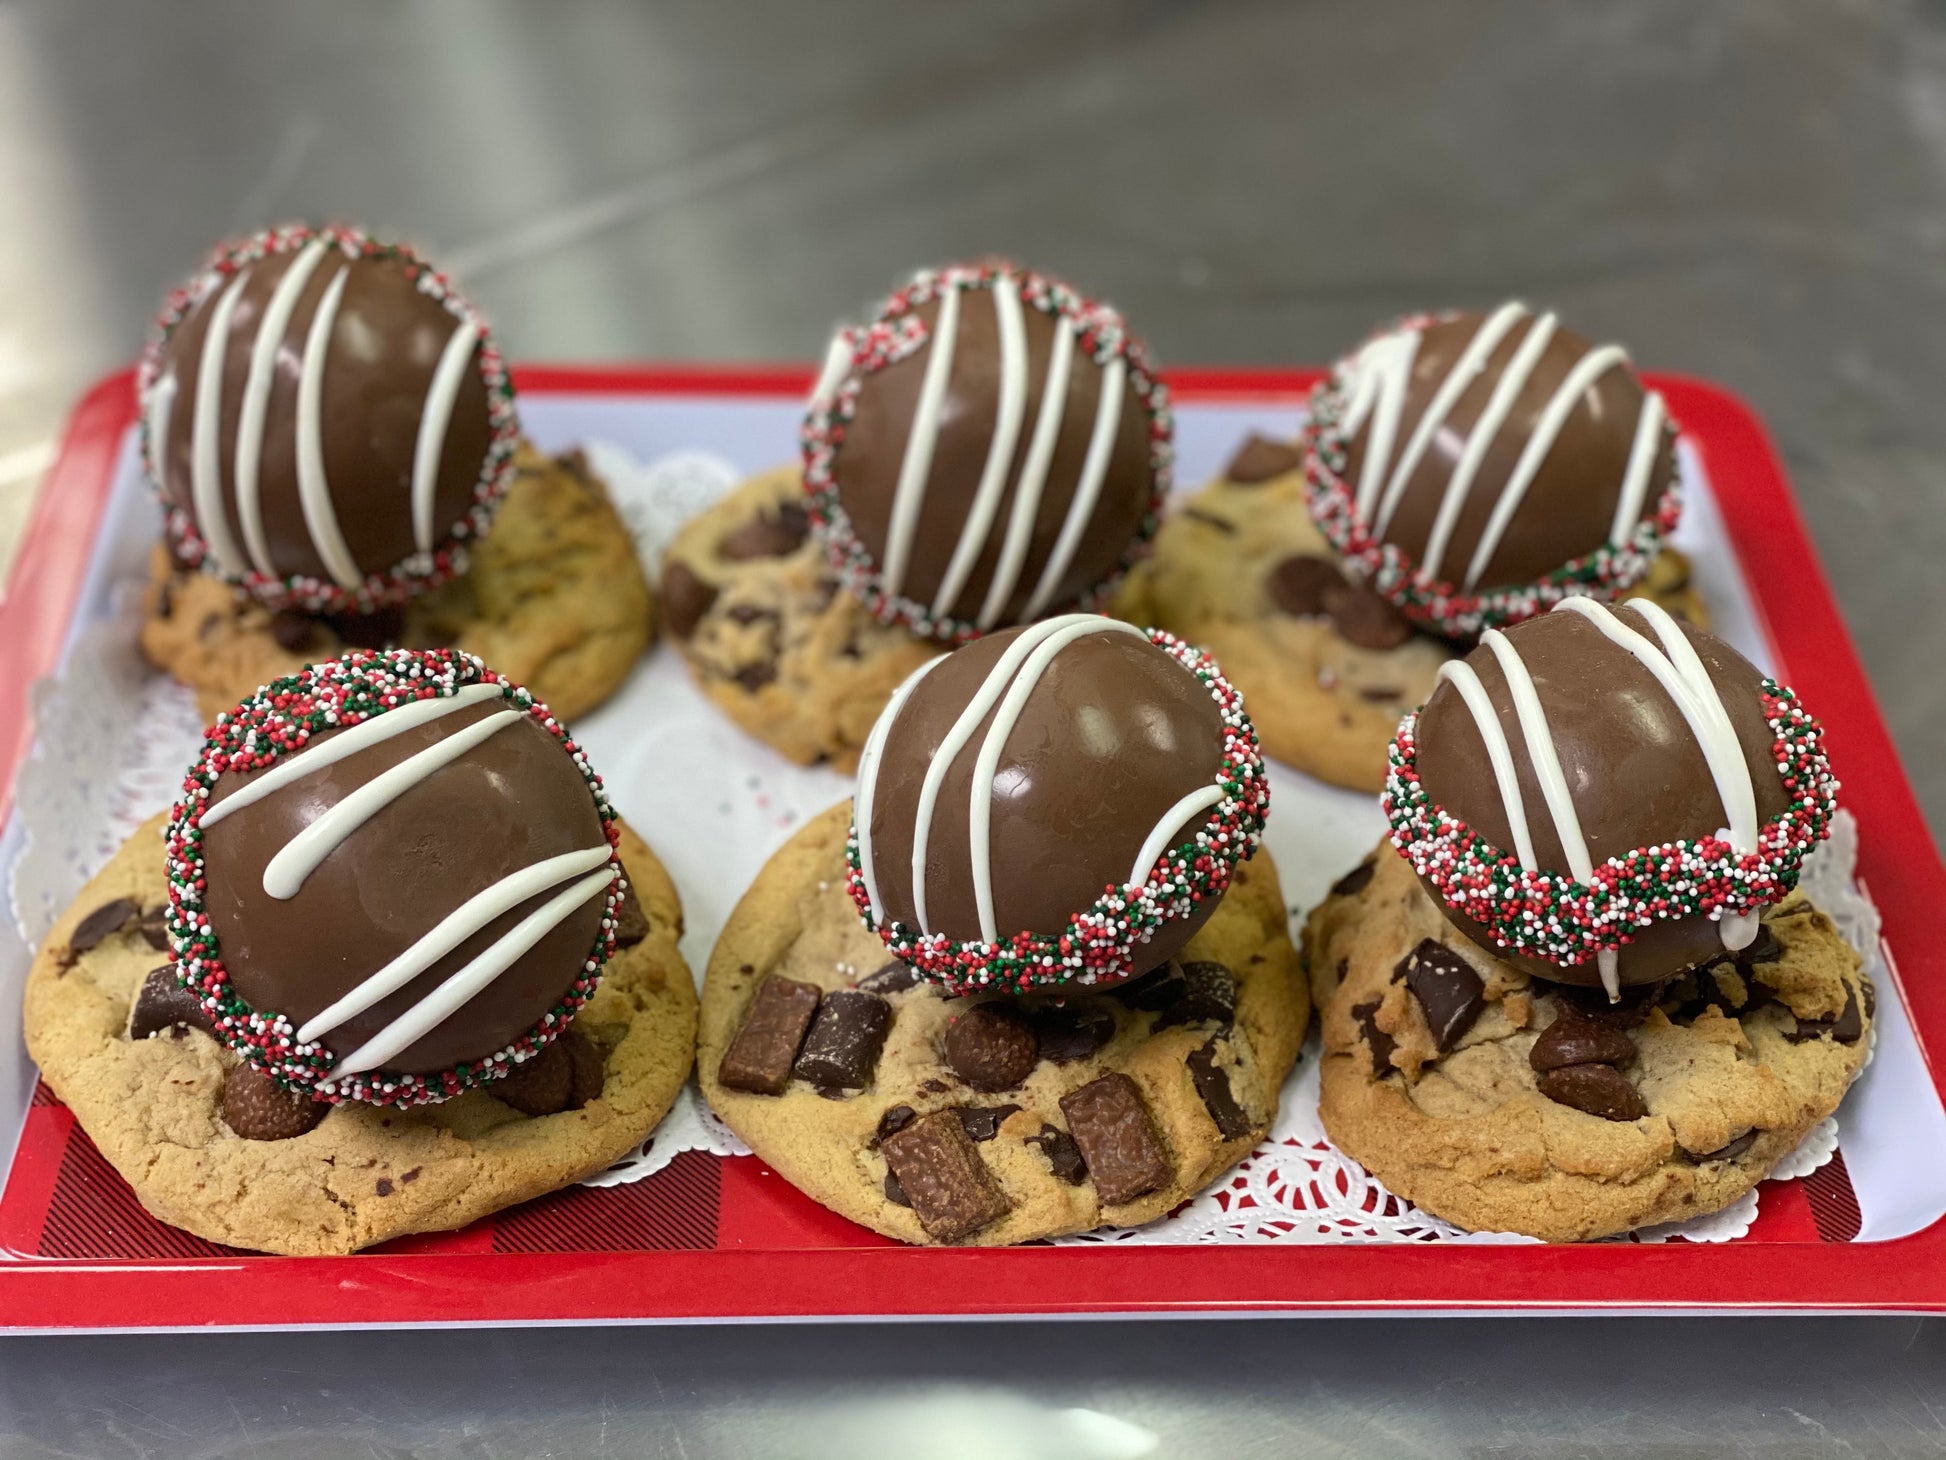 Hot Chocolate Bombs & Cookies - The Dessert Ladies